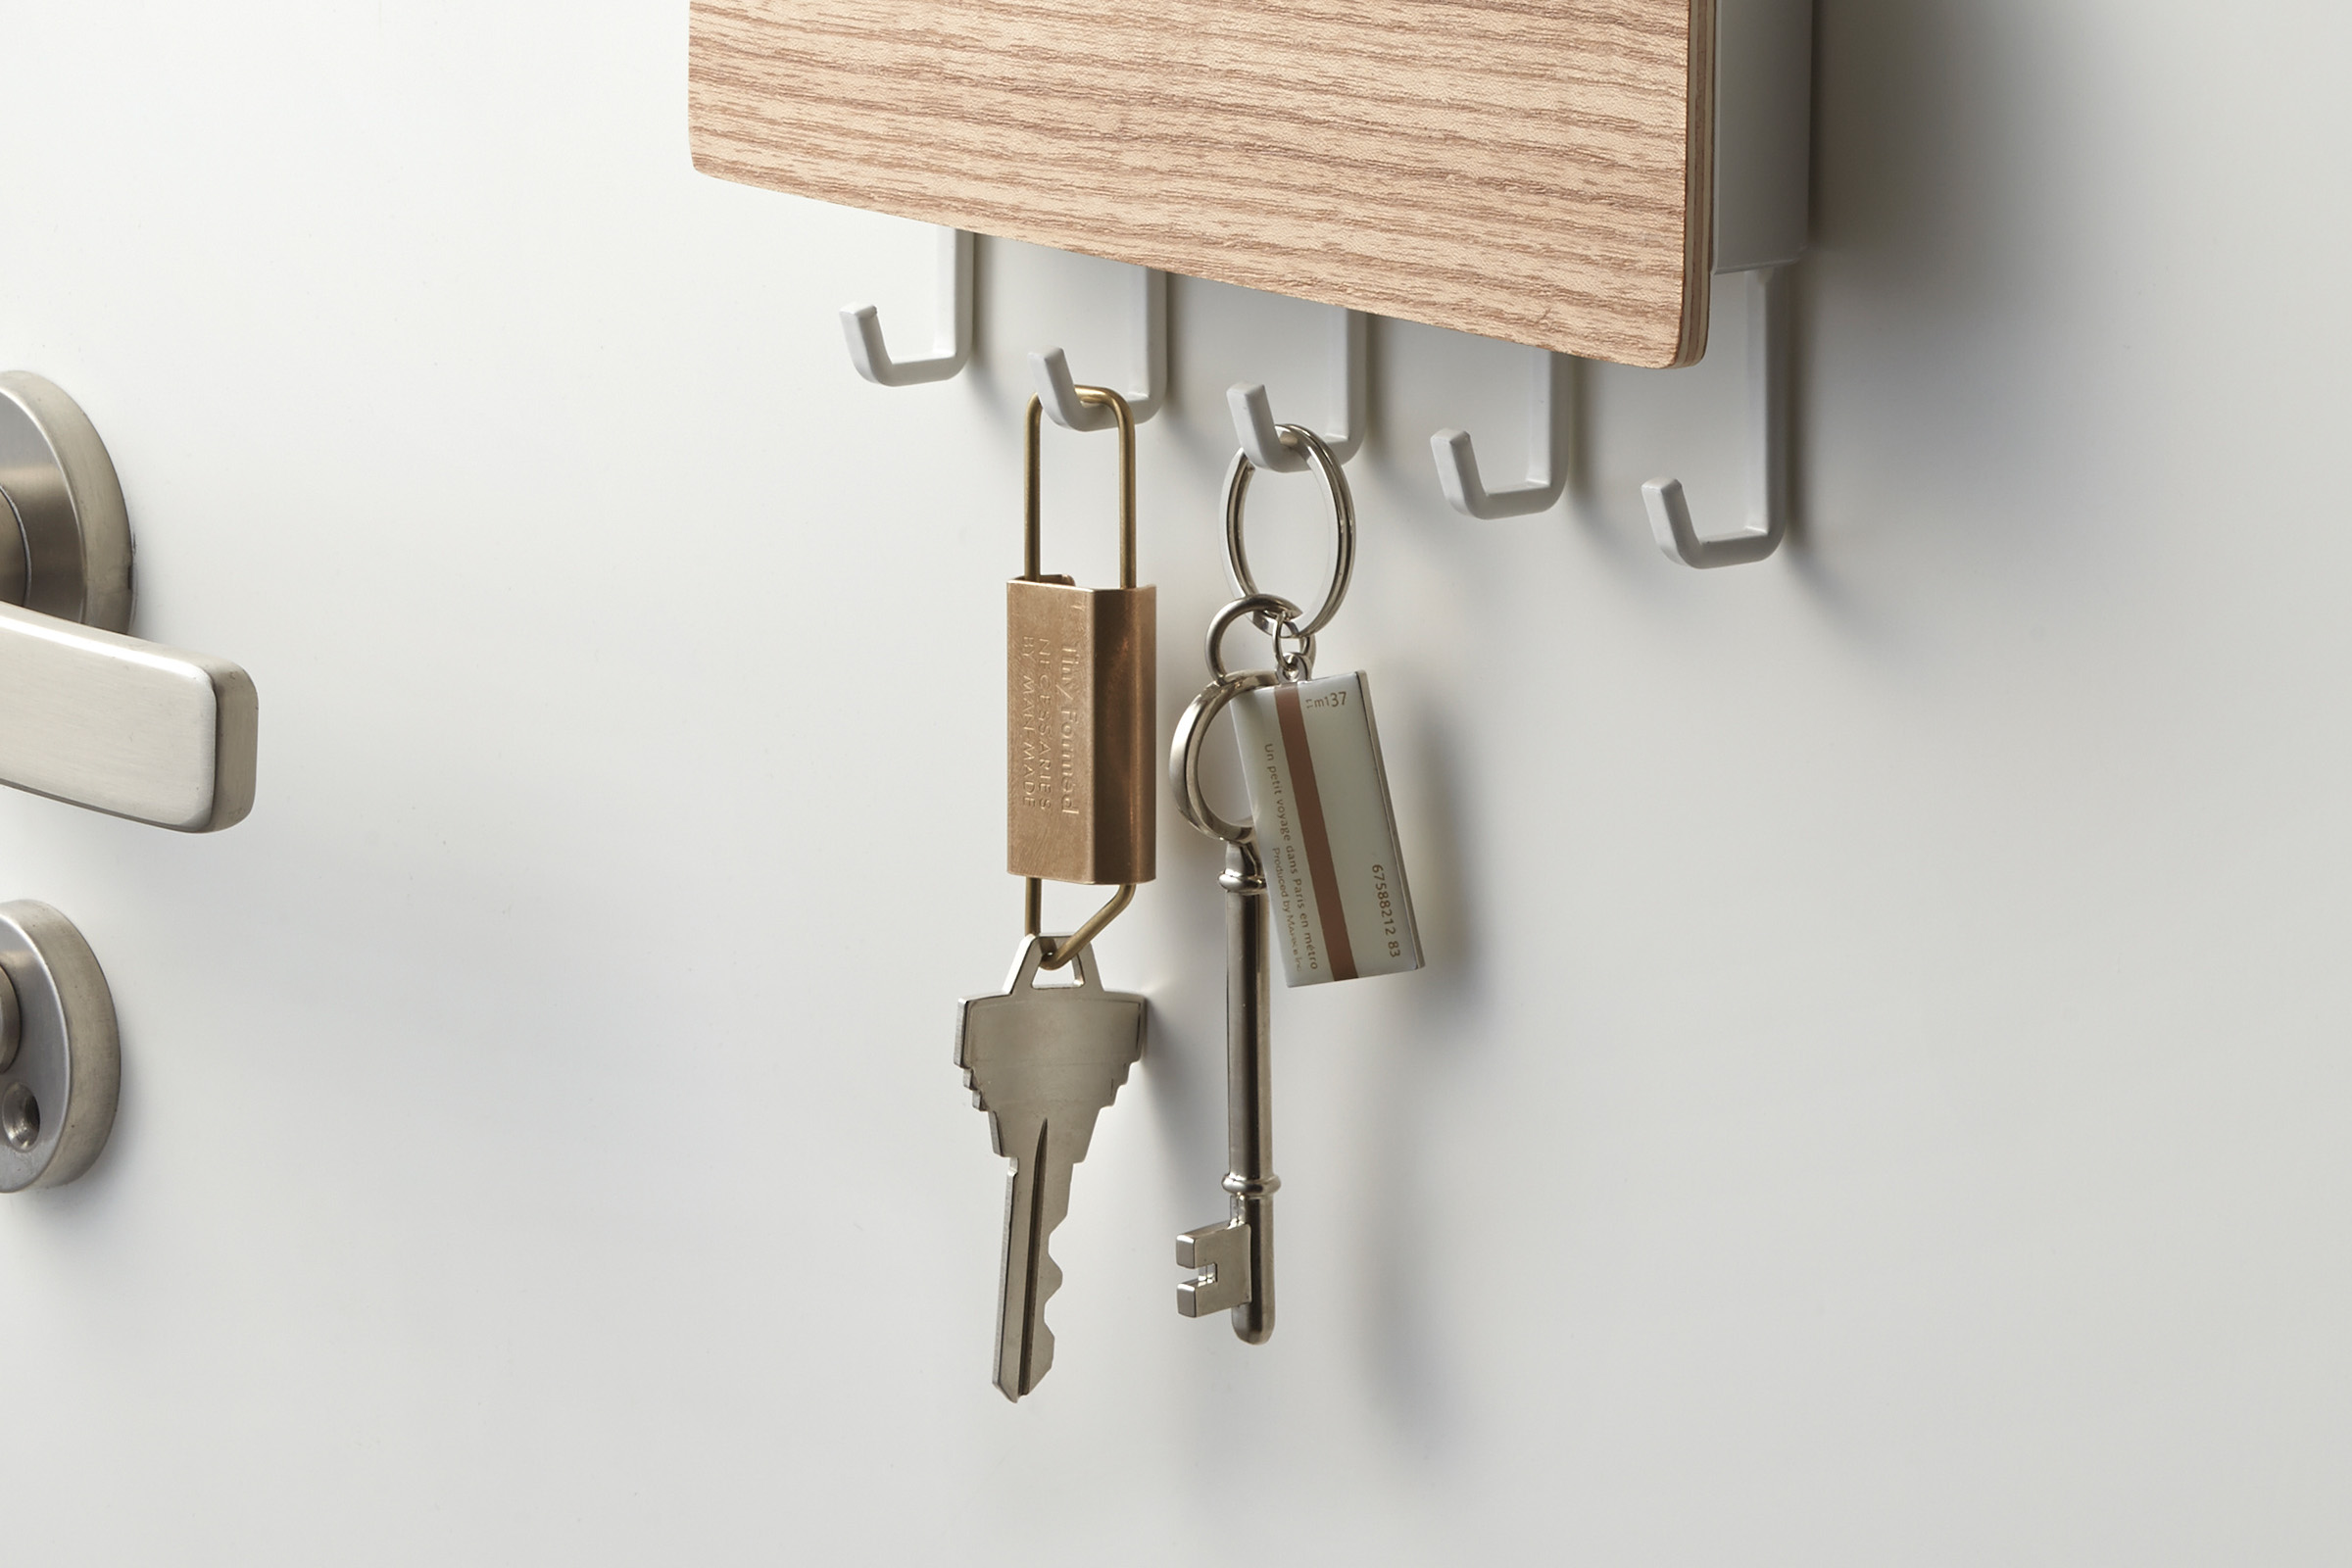 Yamazaki's magnetic key holding keys.